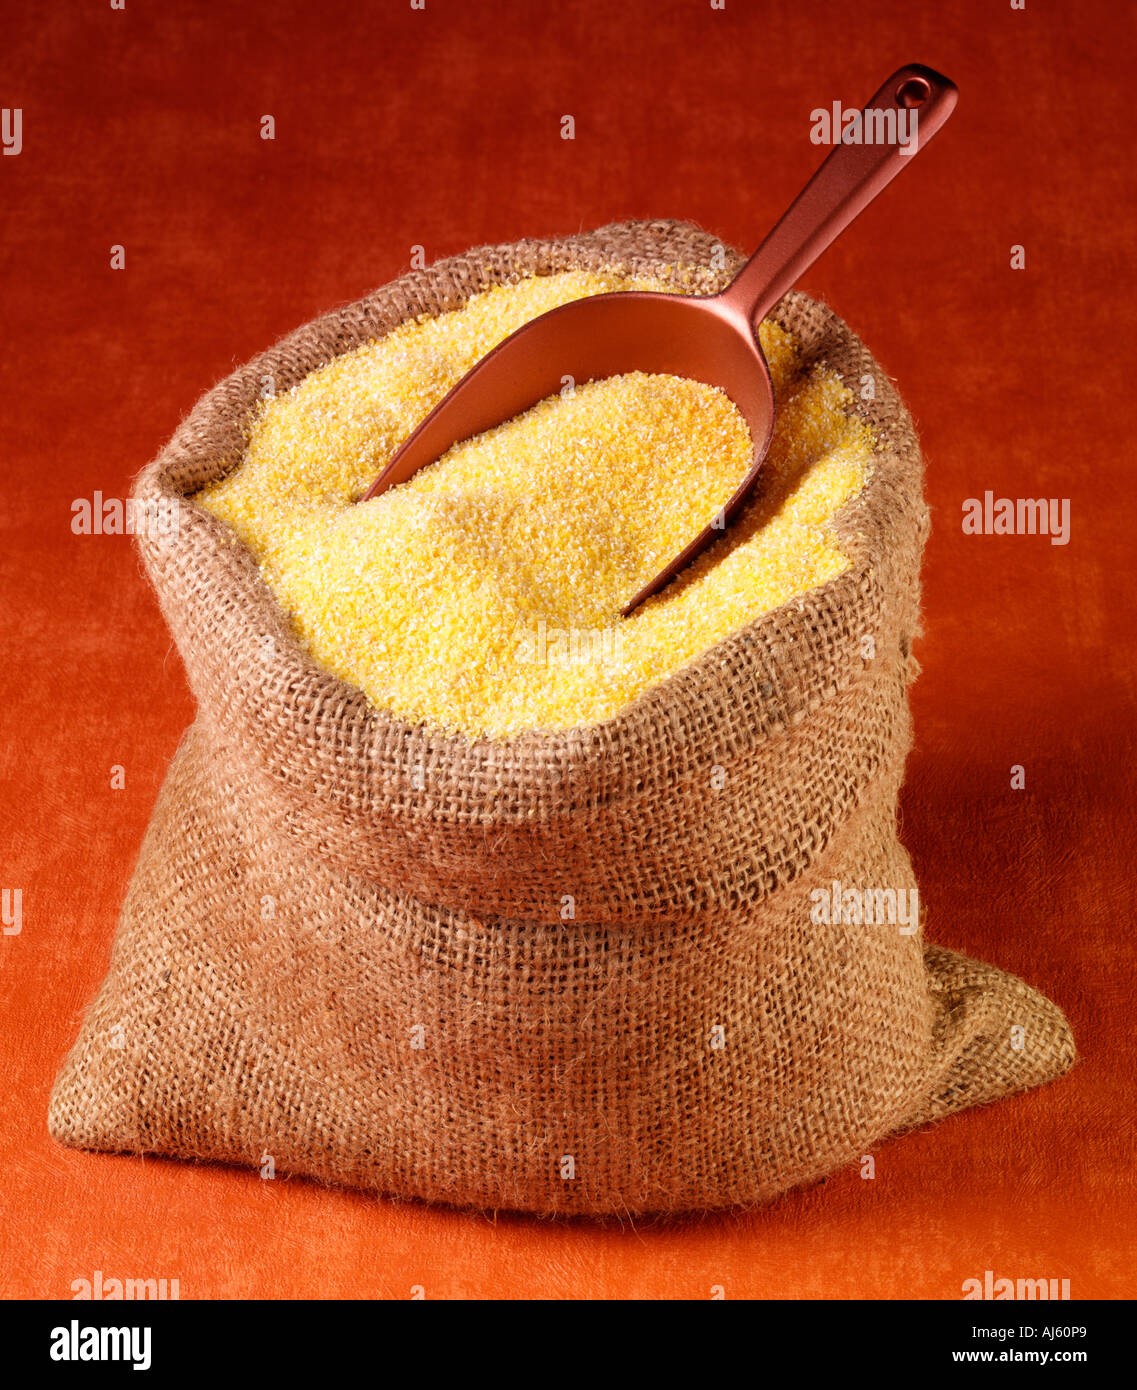 Yellow Corn Grain In A Burlap Bag With An Aluminum Scoop On A White  Background Banco de Imagens Royalty Free, Ilustrações, Imagens e Banco de  Imagens. Image 15109800.